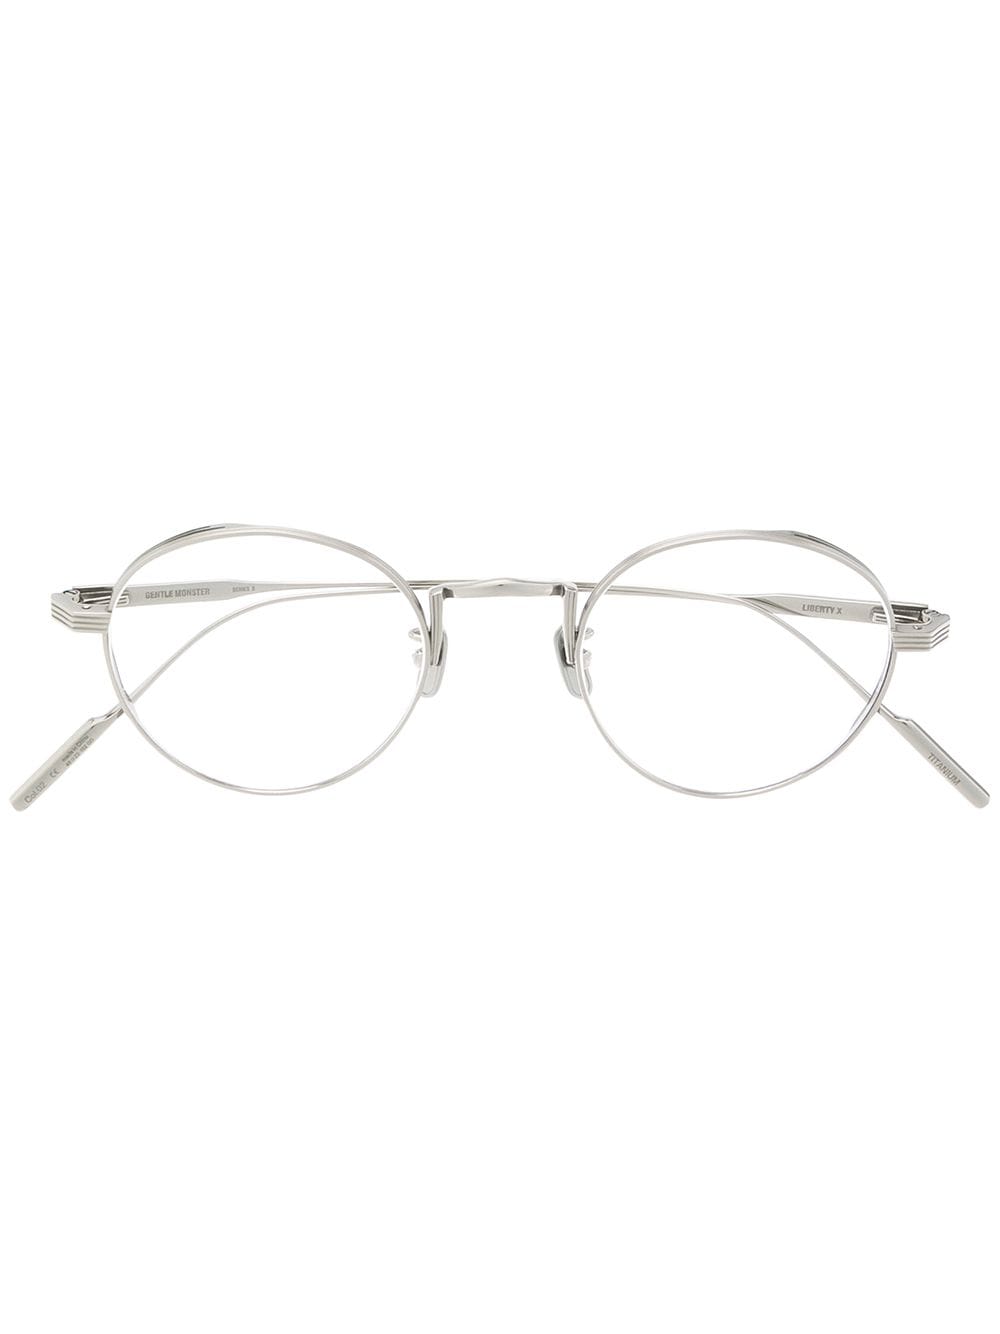 Liberty X 02 round frame glasses